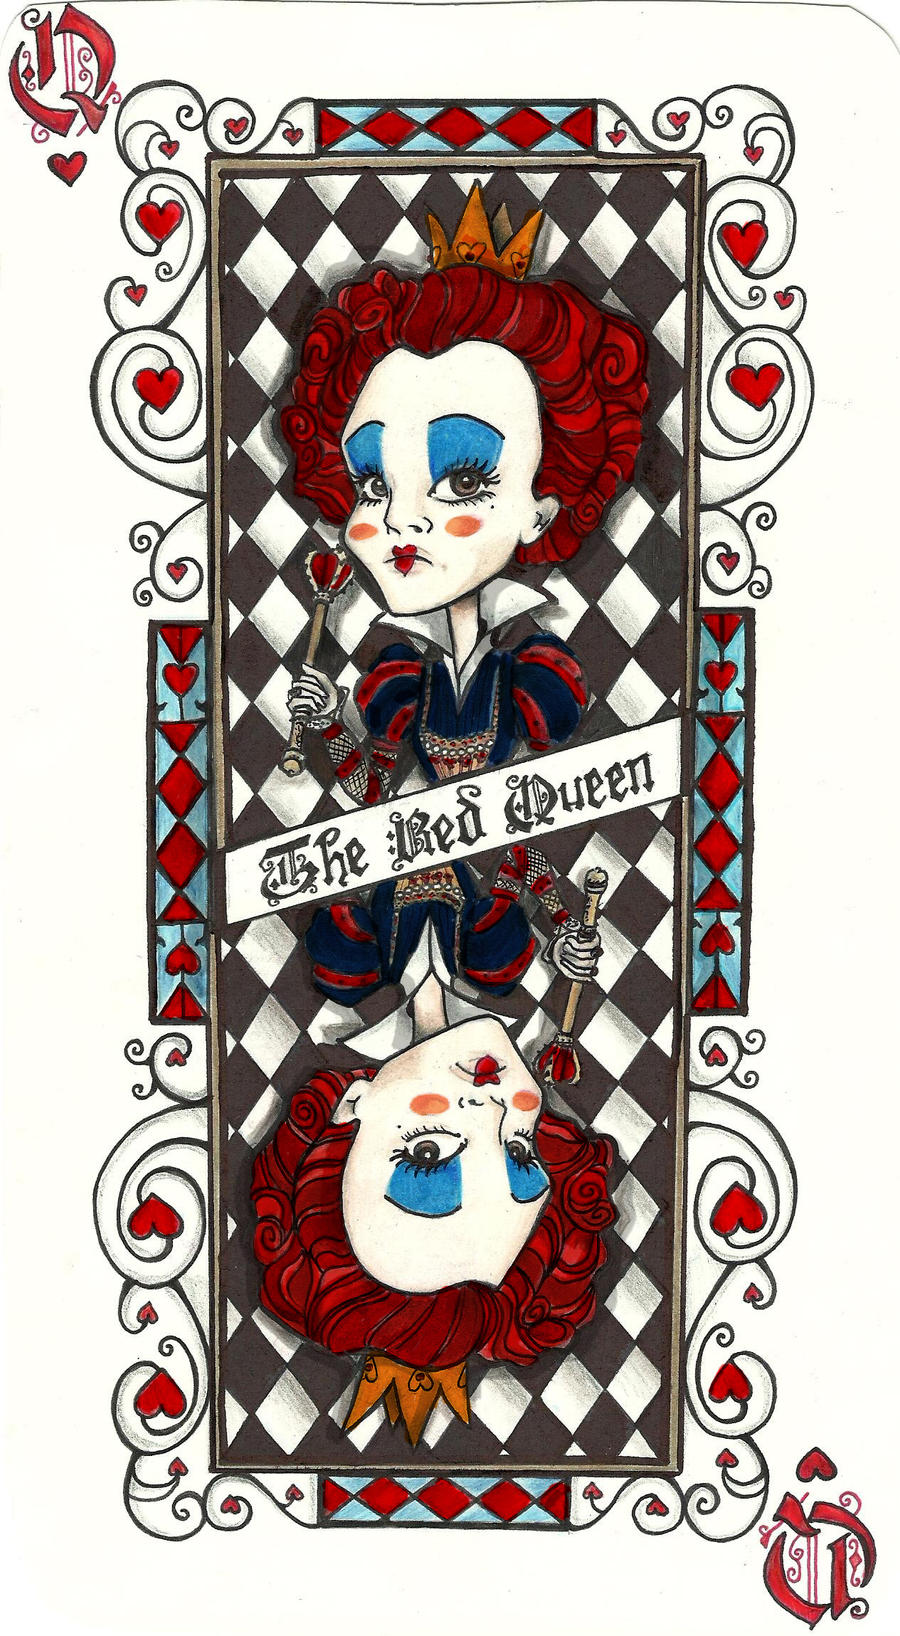 red queen card game by MademoiselleChoco on DeviantArt